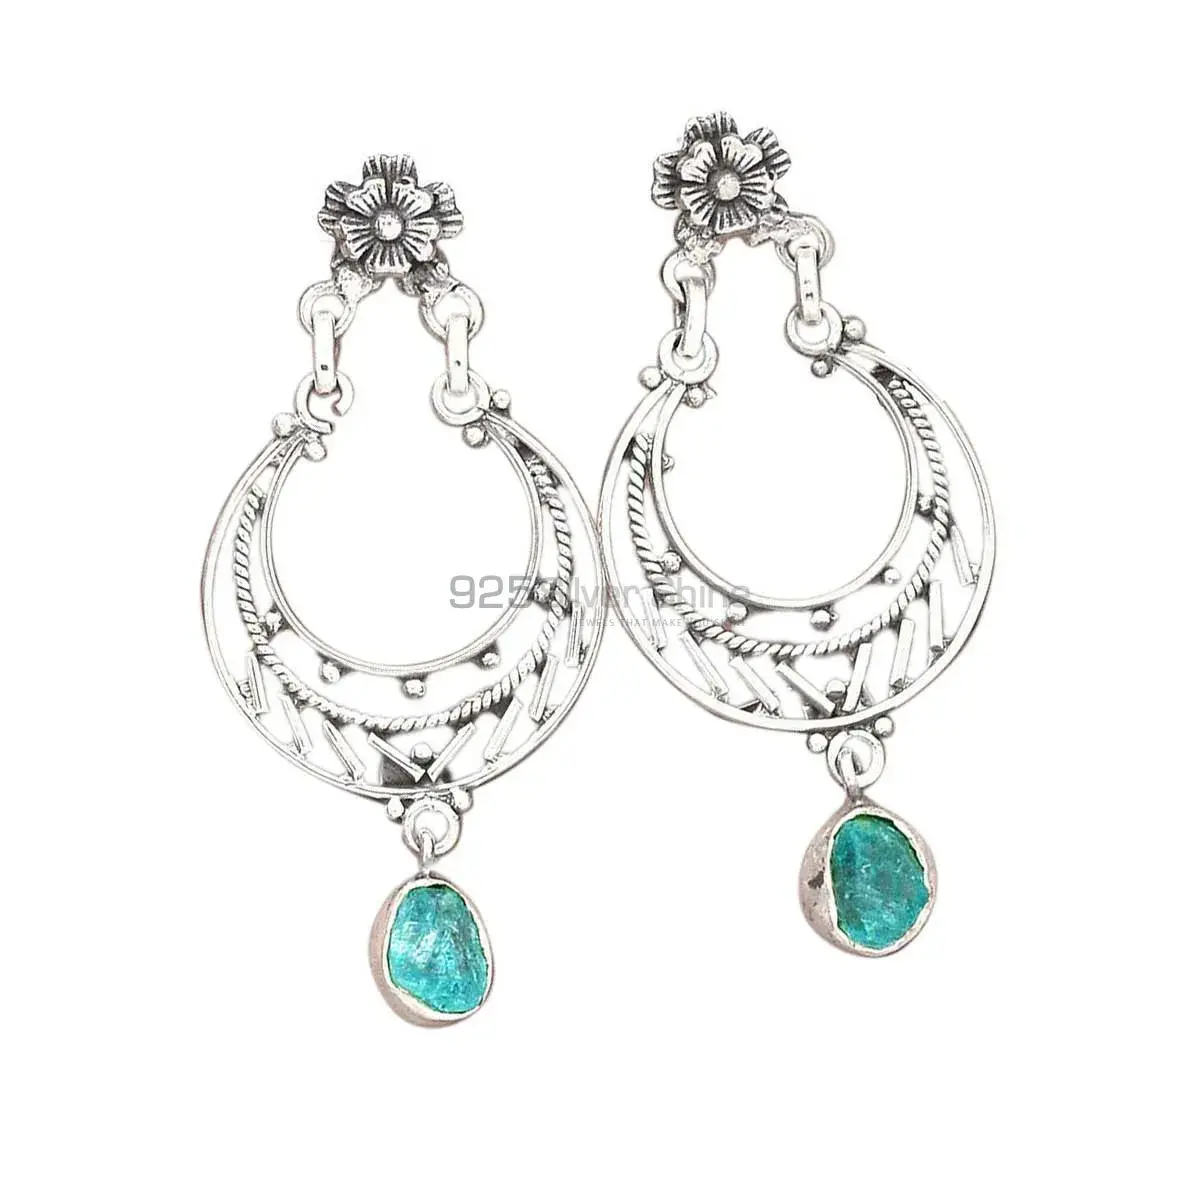 Best Design 925 Sterling Silver Handmade Earrings Suppliers In Apatite Gemstone Jewelry 925SE3112